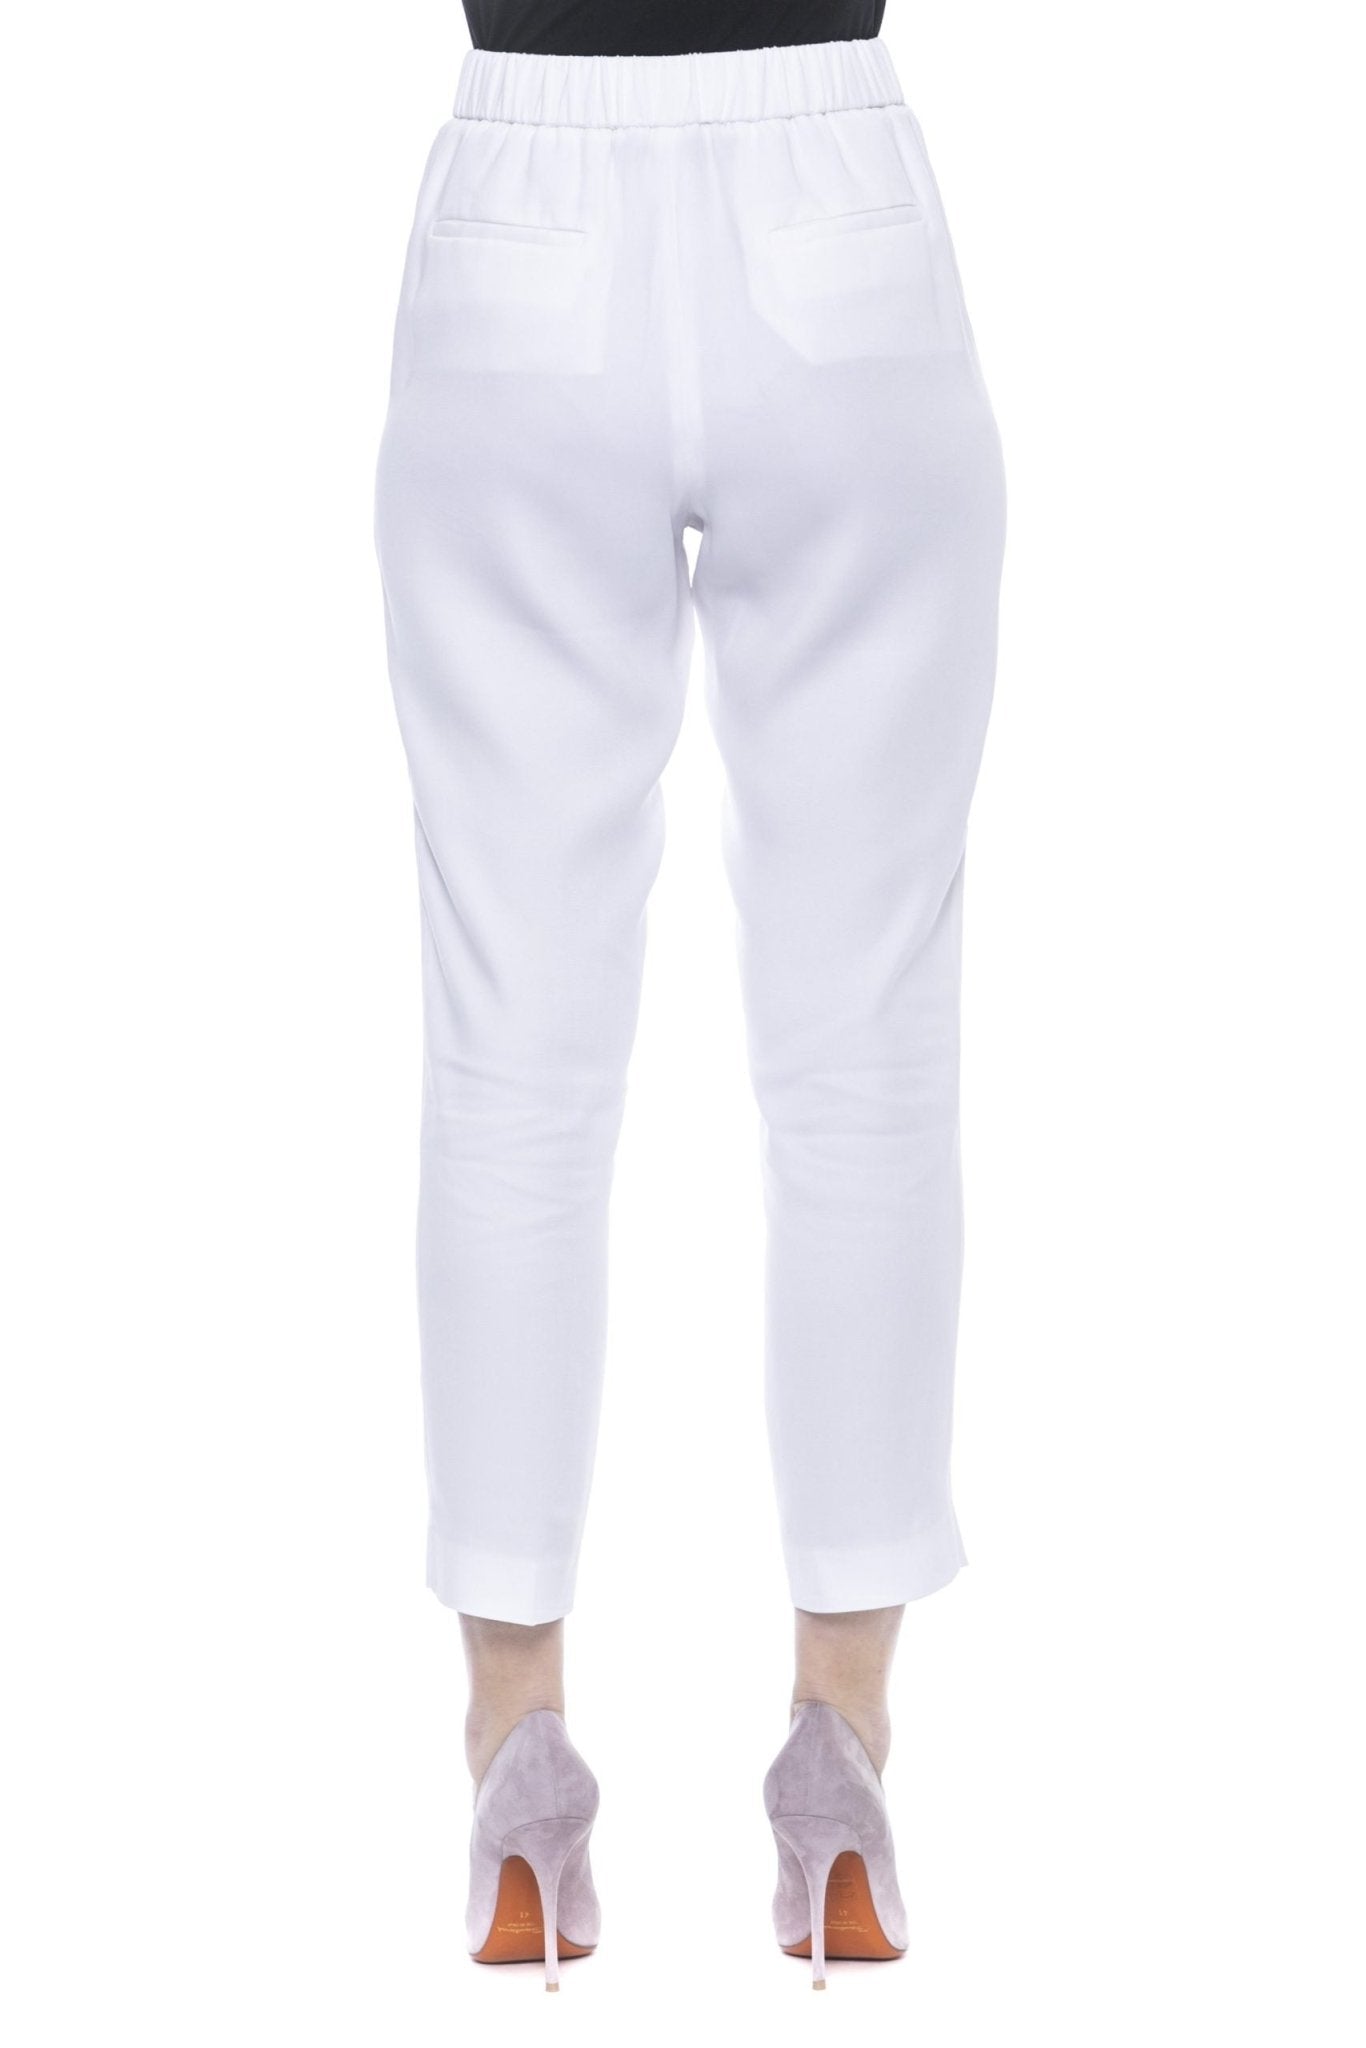 Peserico White Viscose Jeans & Pant - Fizigo